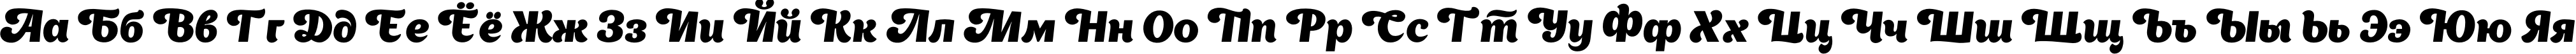 Пример написания русского алфавита шрифтом AppetiteNew